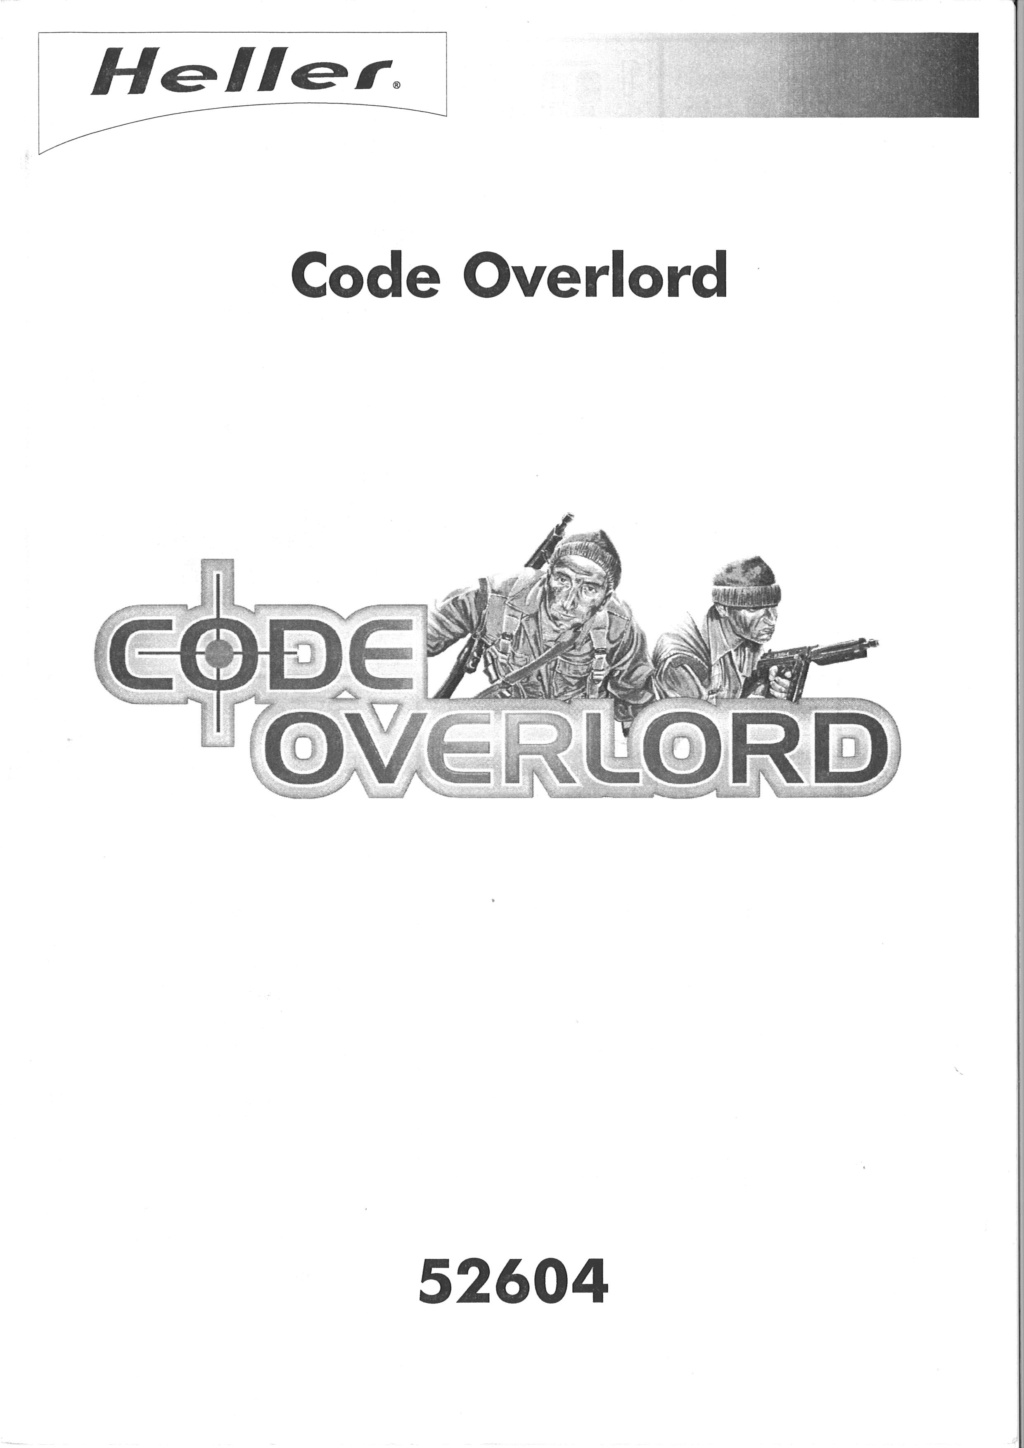 Coffret CODE OVERLORD D-DAY 60th anniversaire 1/72ème Réf 52864 Notice Code_o10